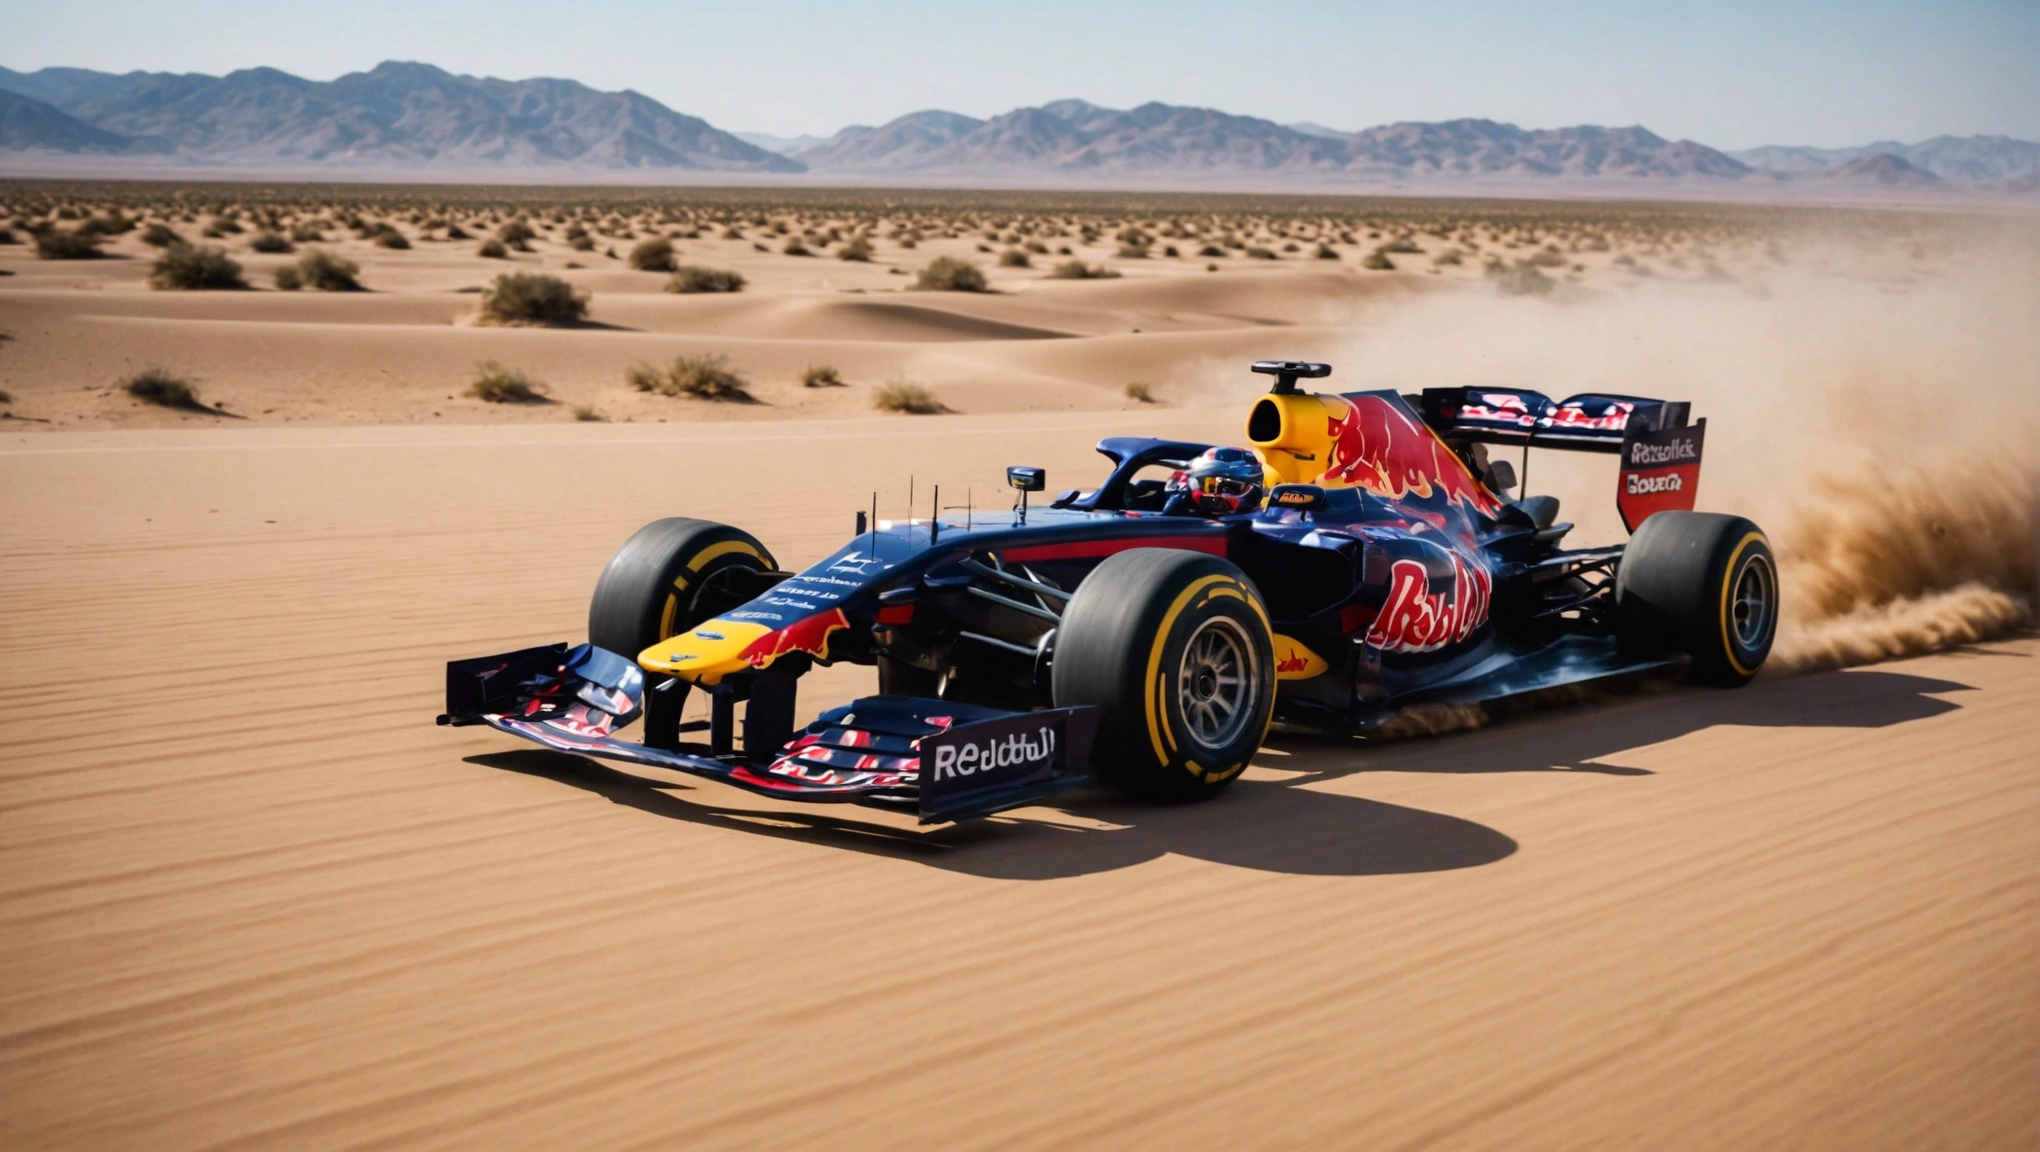 redbull formula 1 car in the middle of the desert 